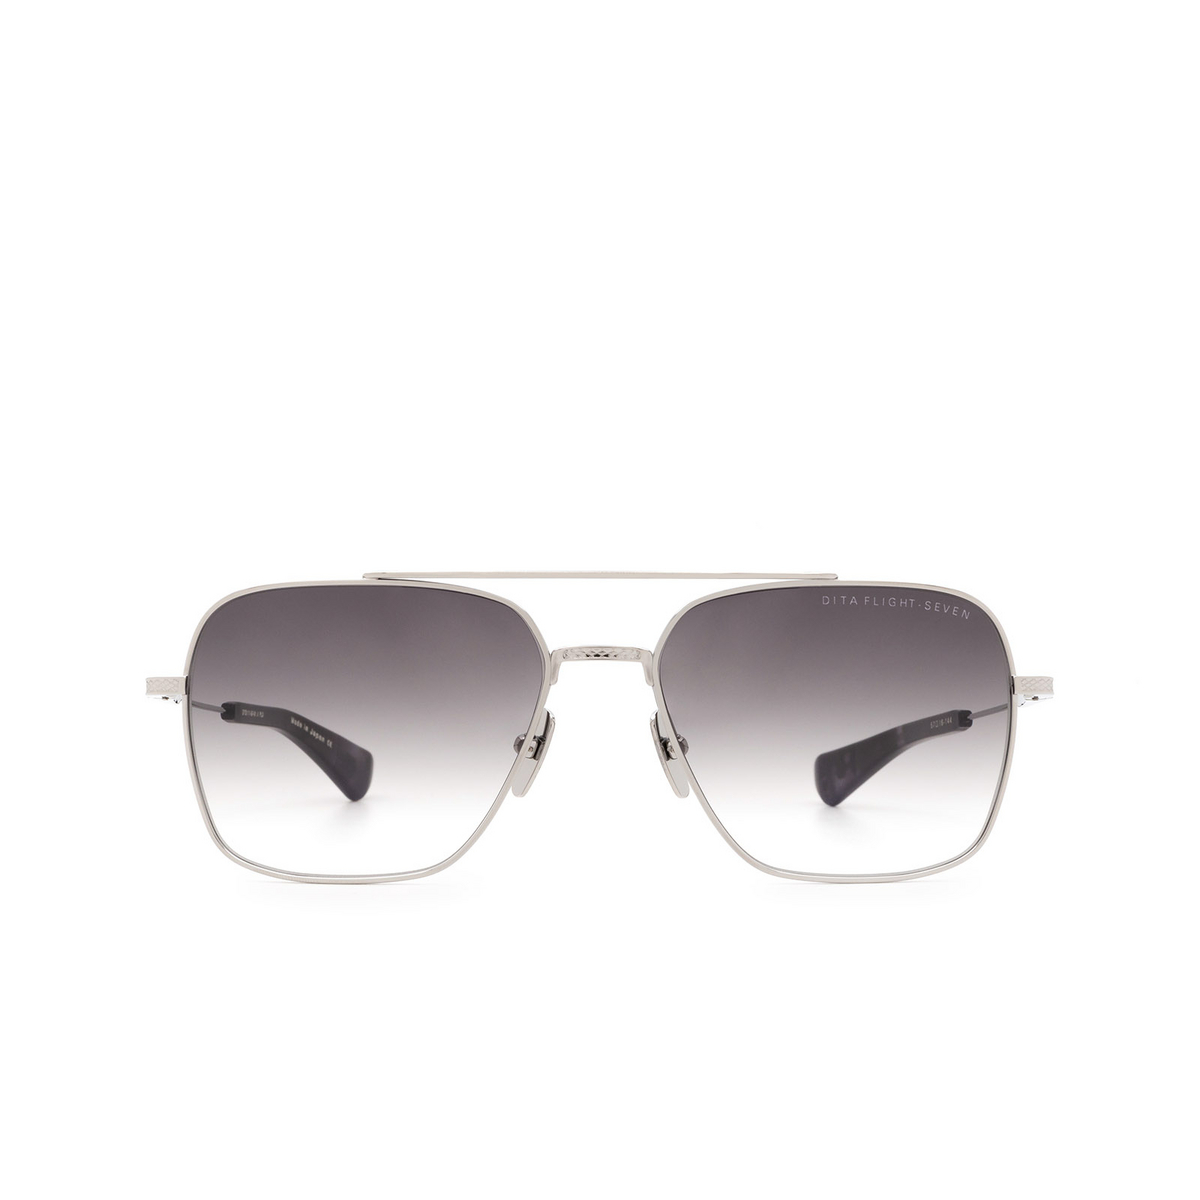 Dita® Aviator Sunglasses: Flight-seven DTS111-57-01-Z color Black Palladium Pld - front view.